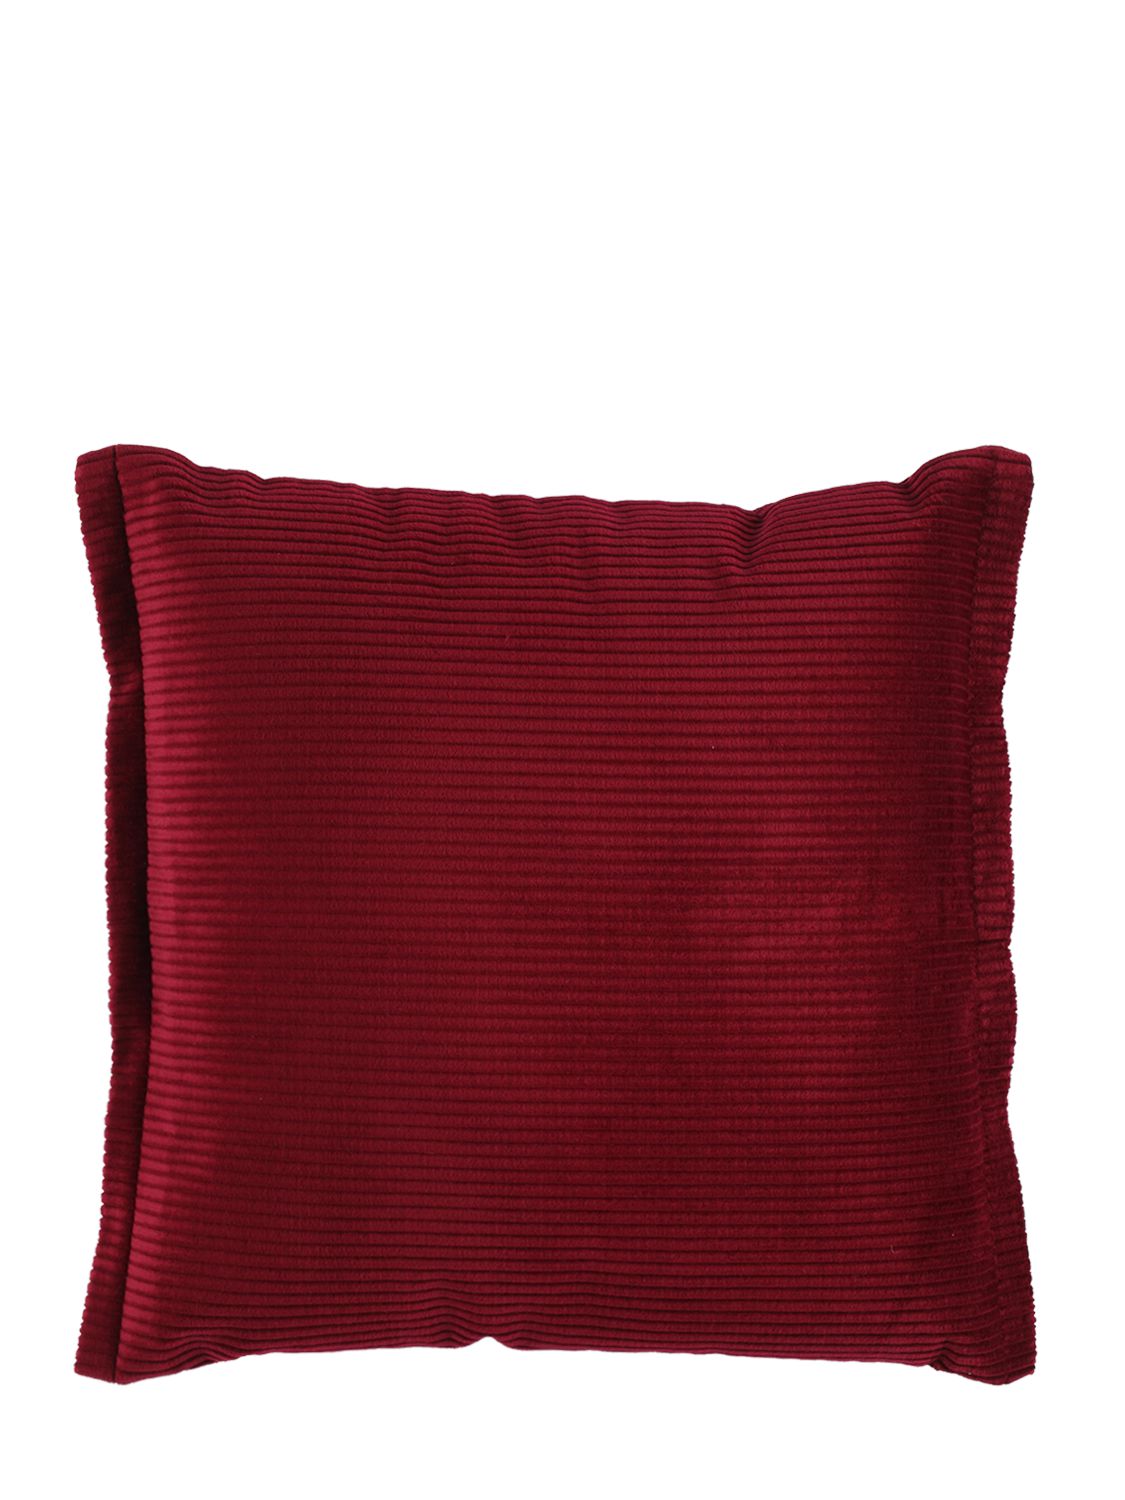 Lanerossi Dueville Cotton Cushion In Red